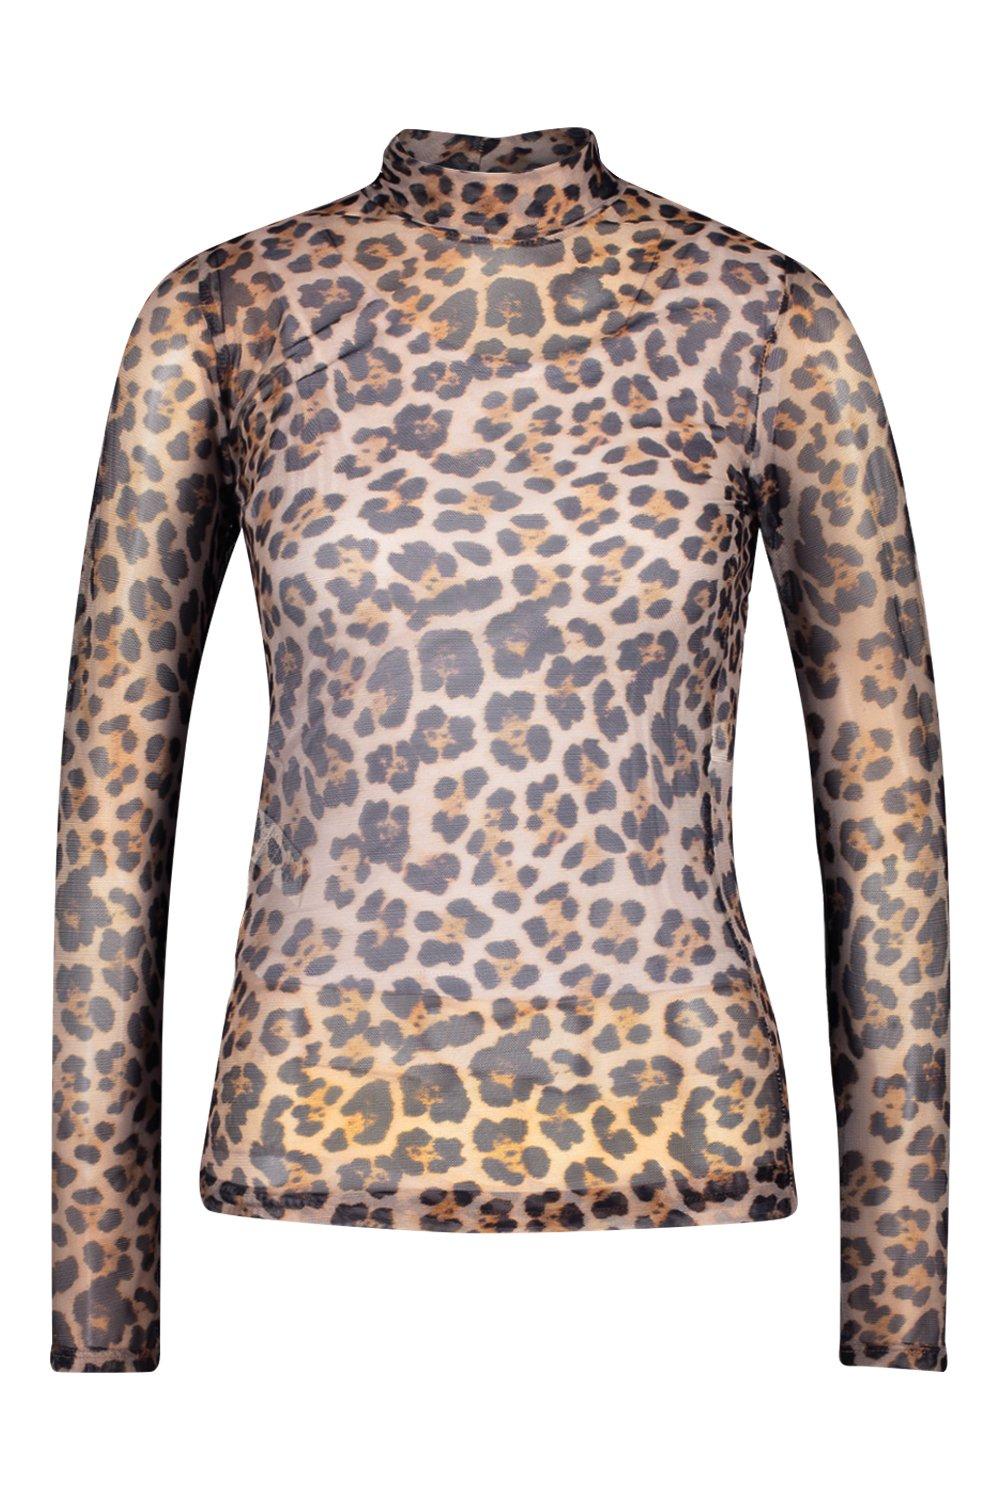 Women's Leopard Print Mesh Turtle Neck Long Sleeve Top